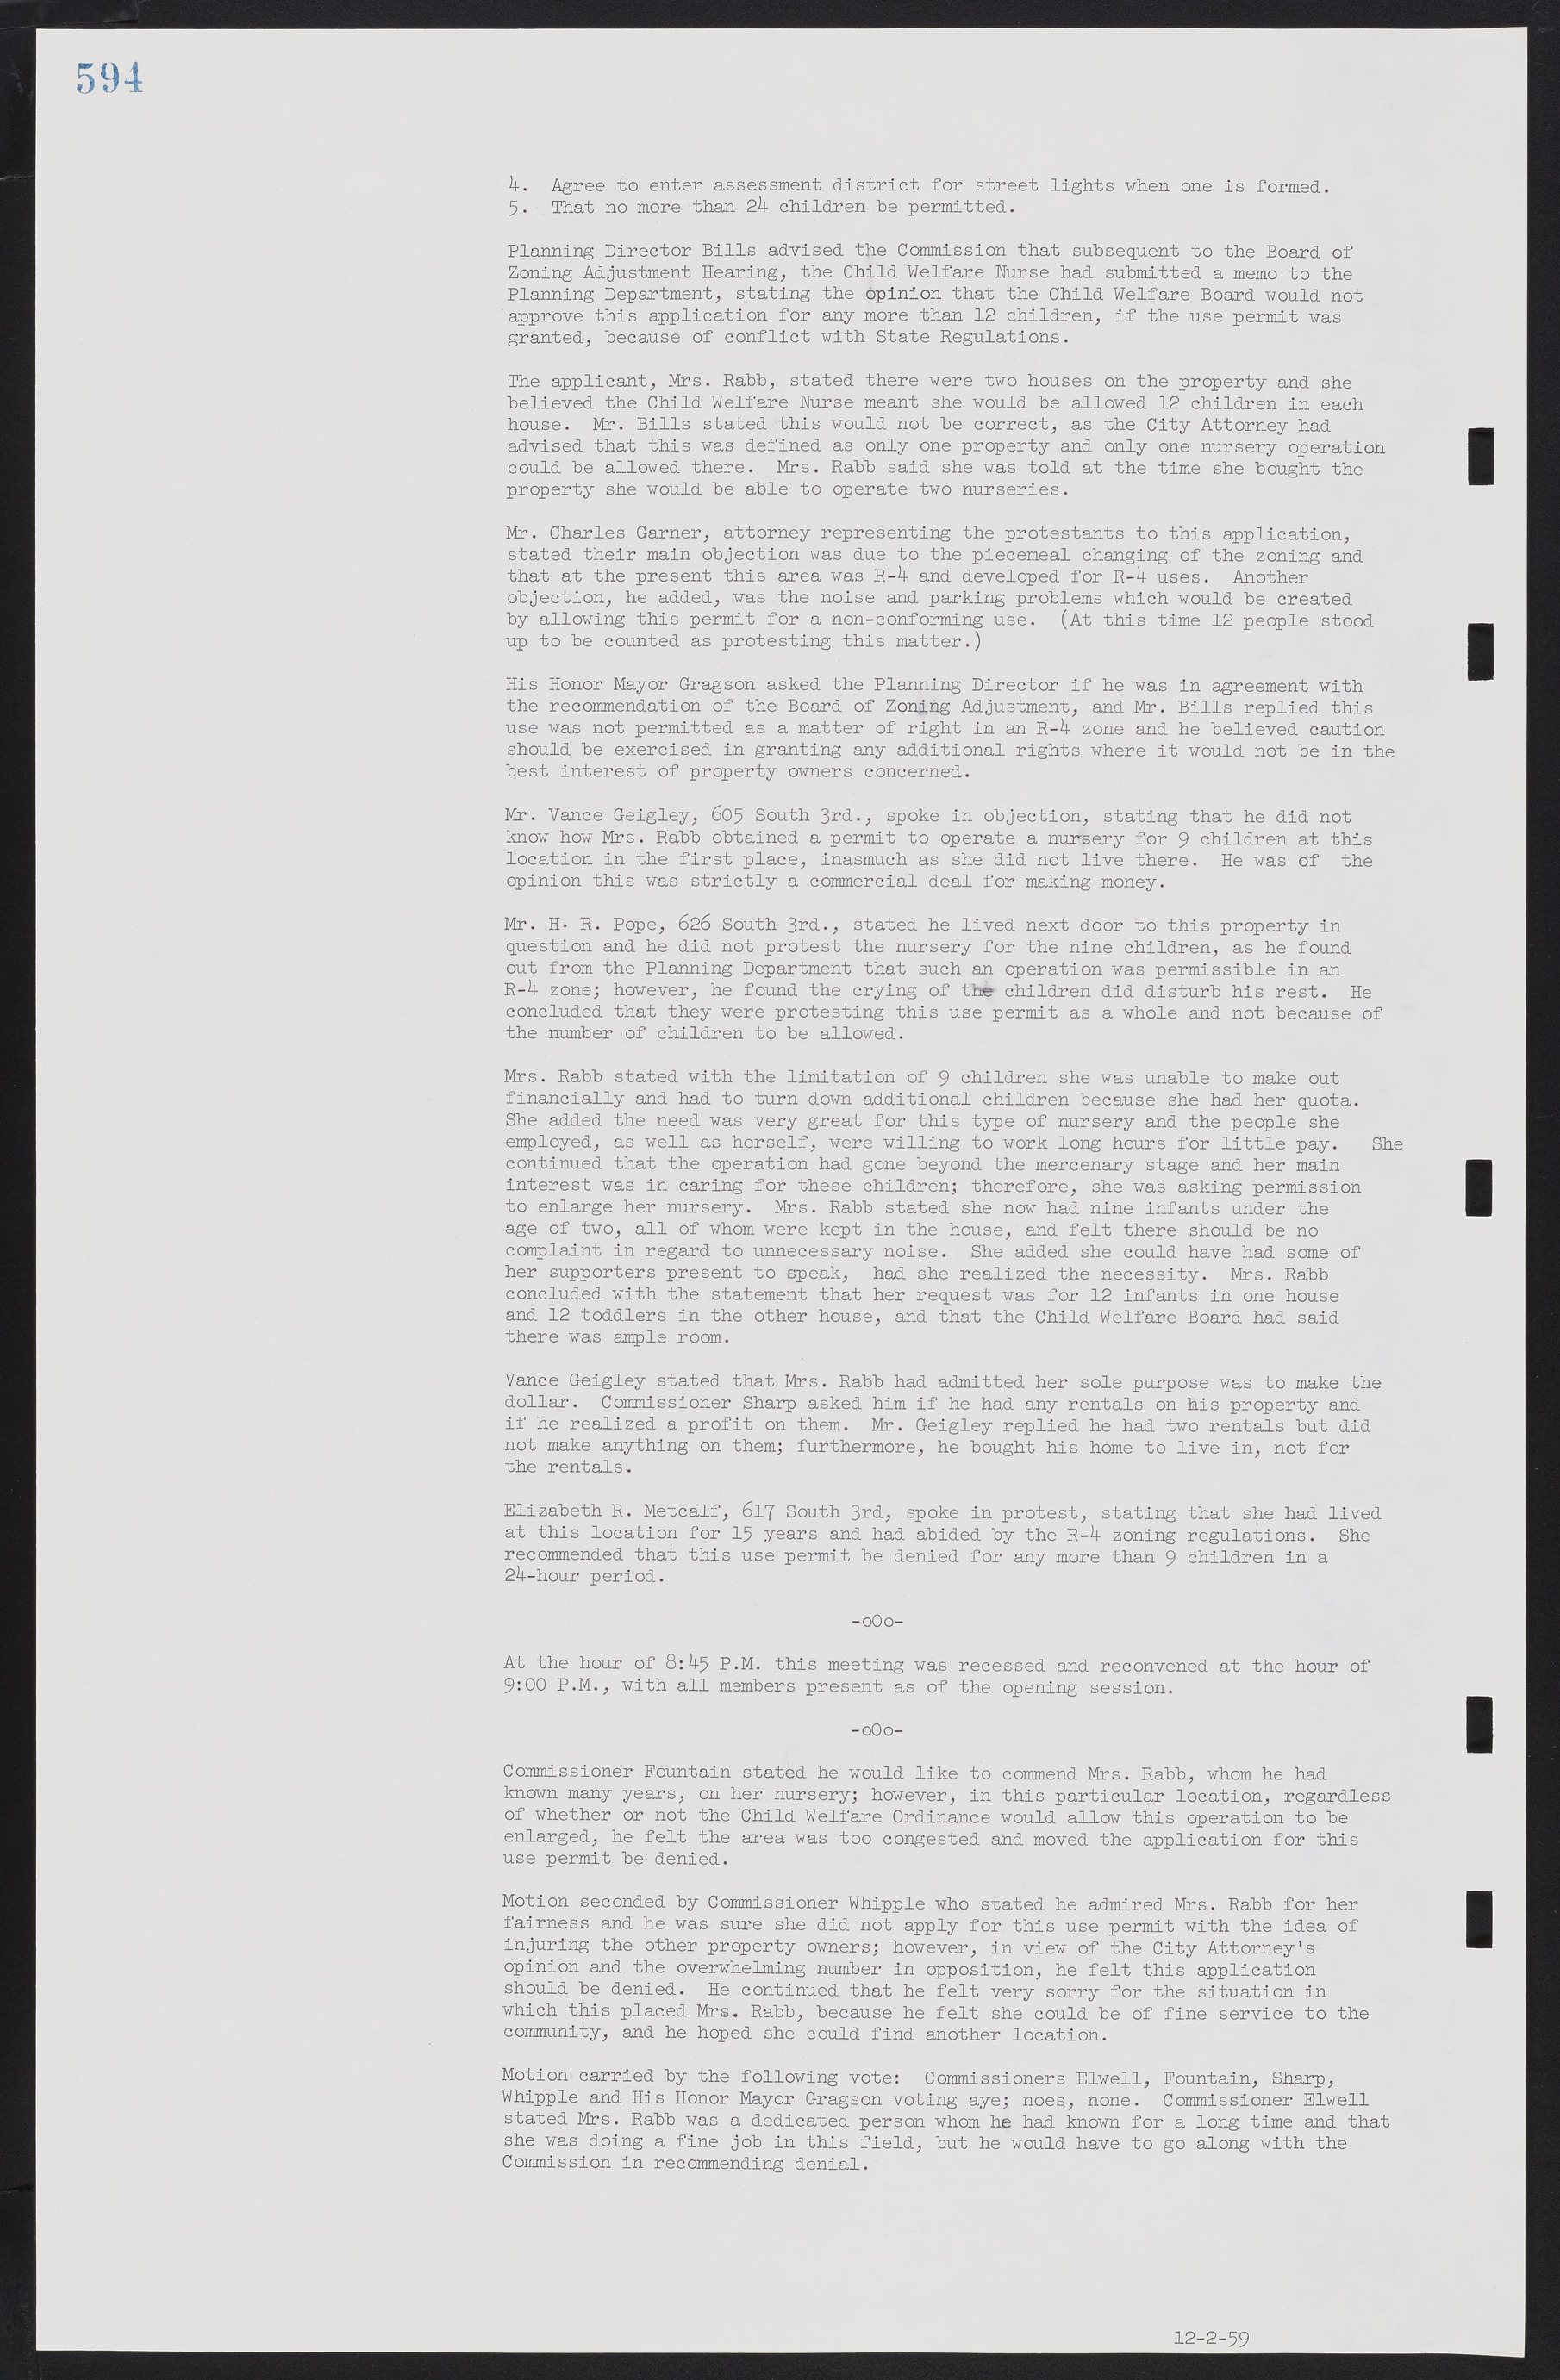 Las Vegas City Commission Minutes, November 20, 1957 to December 2, 1959, lvc000011-630